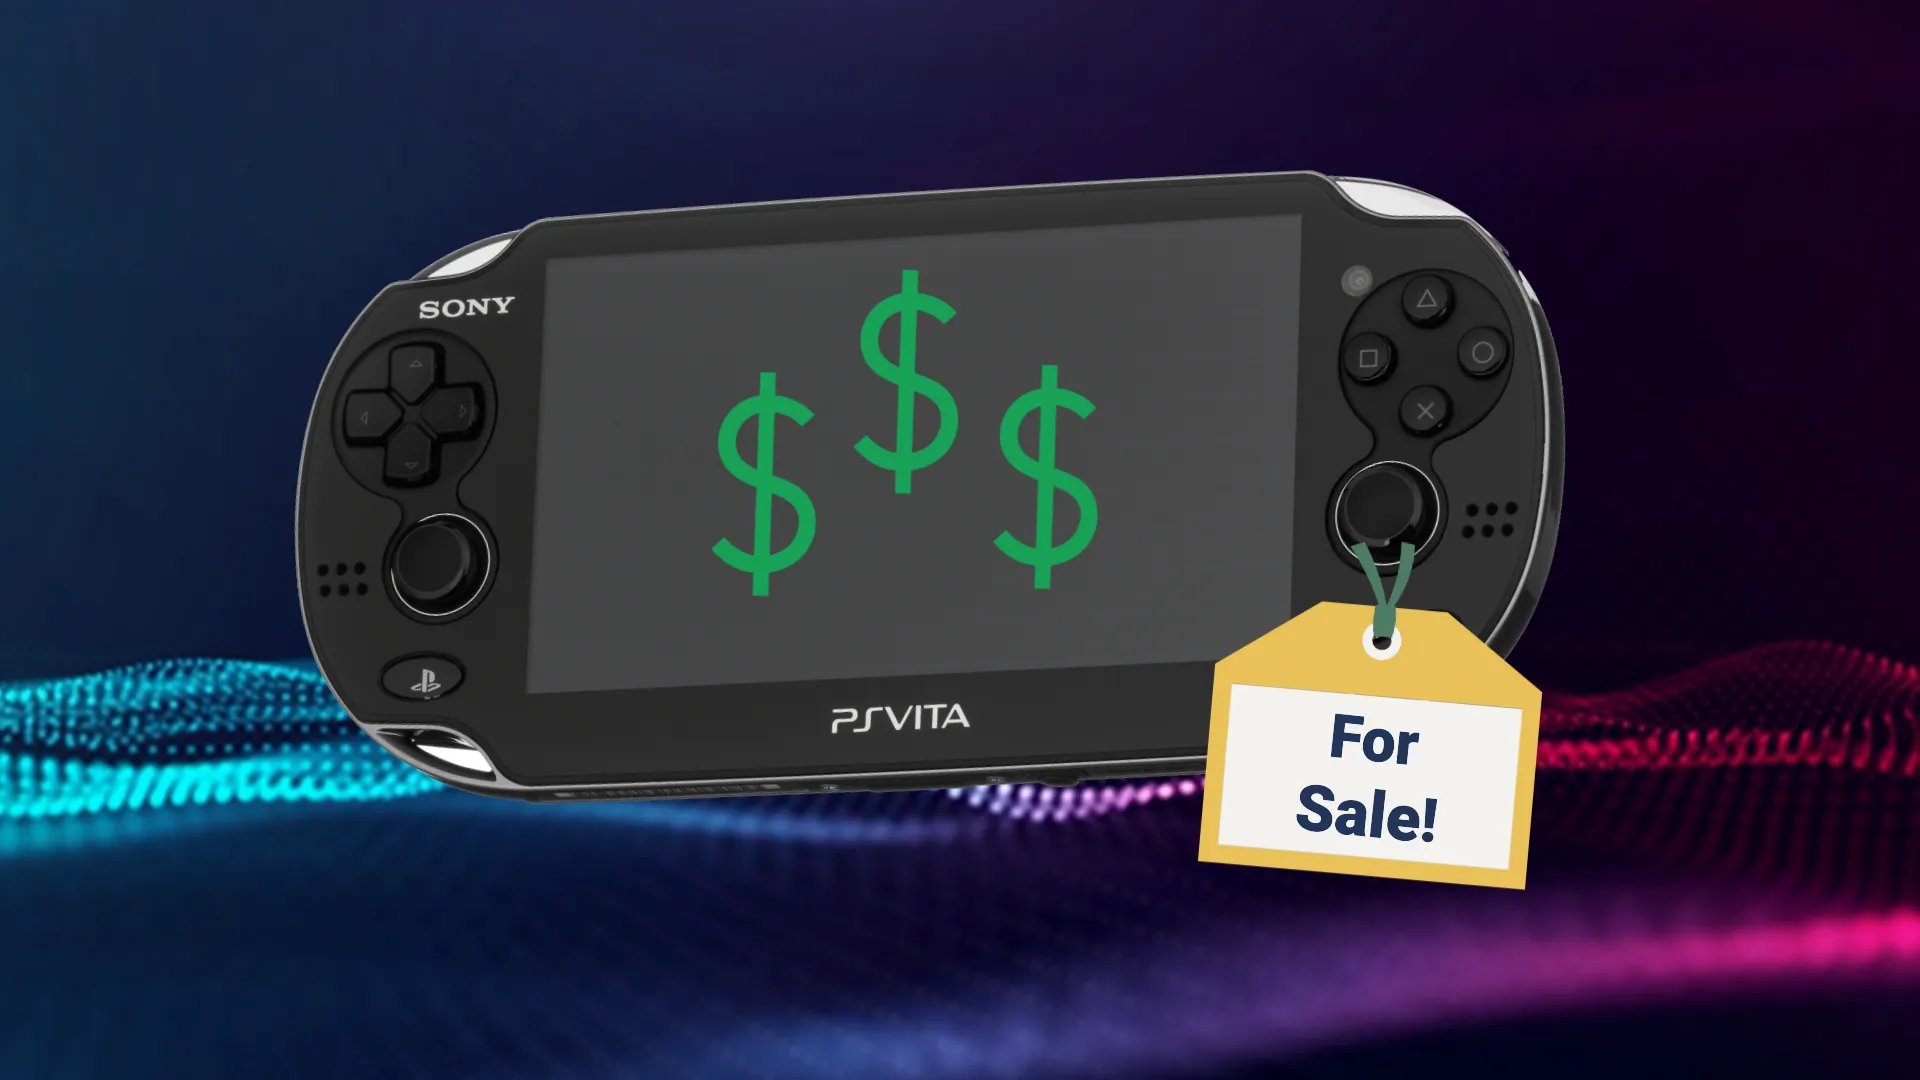 The PS Vita in 2022: Still Worth Buying? 